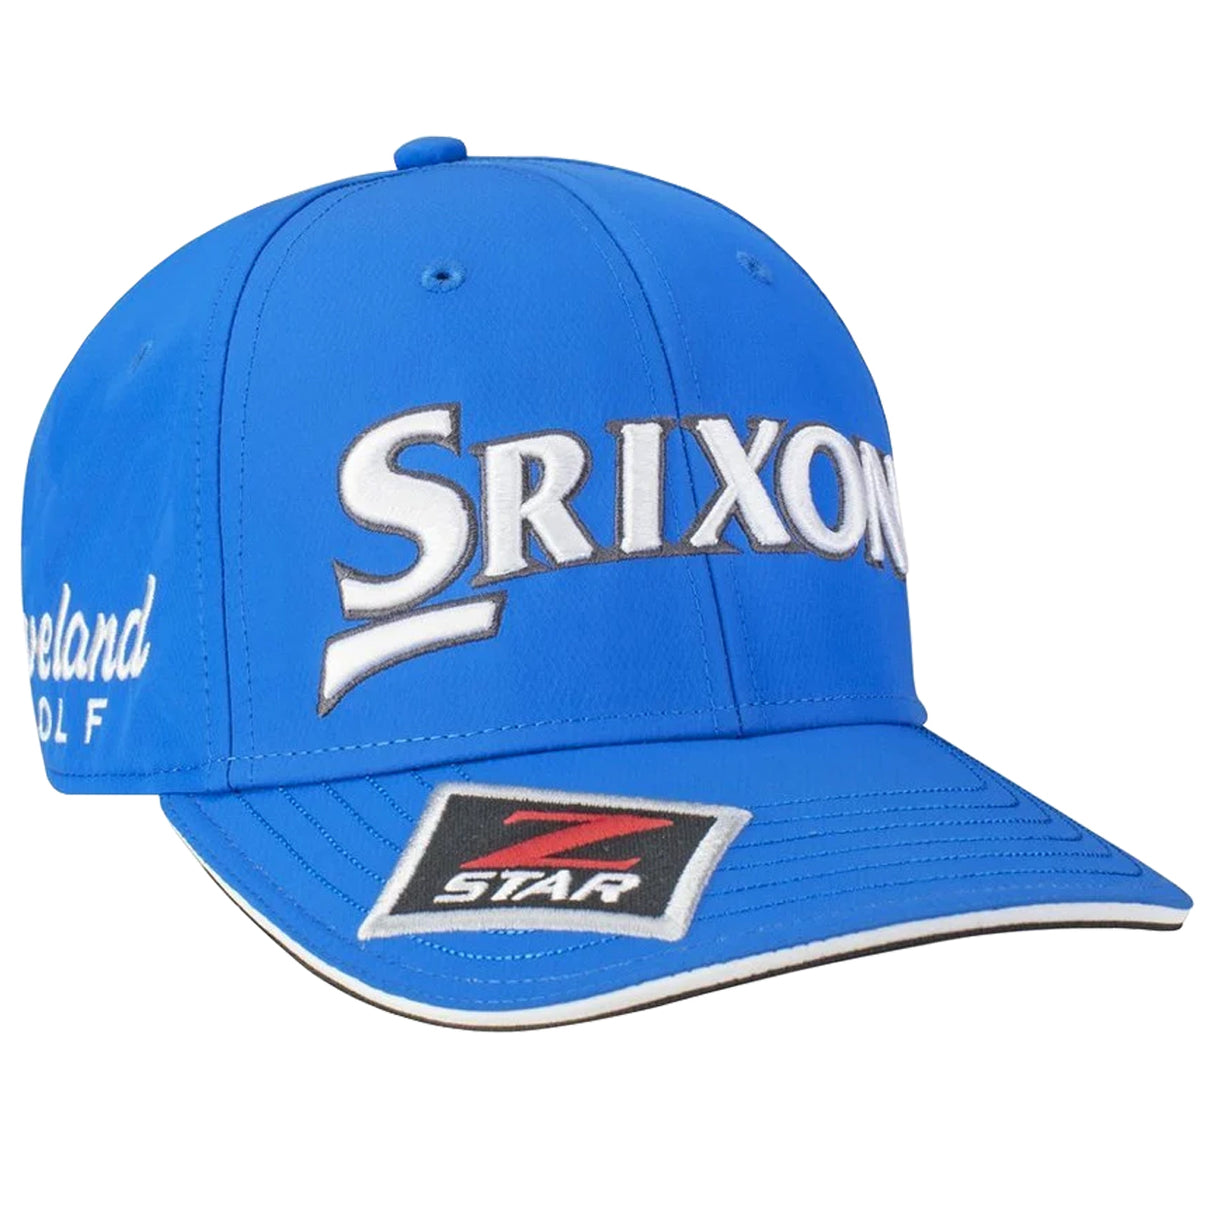 Srixon Golf Tour Staff Adjustable Hat